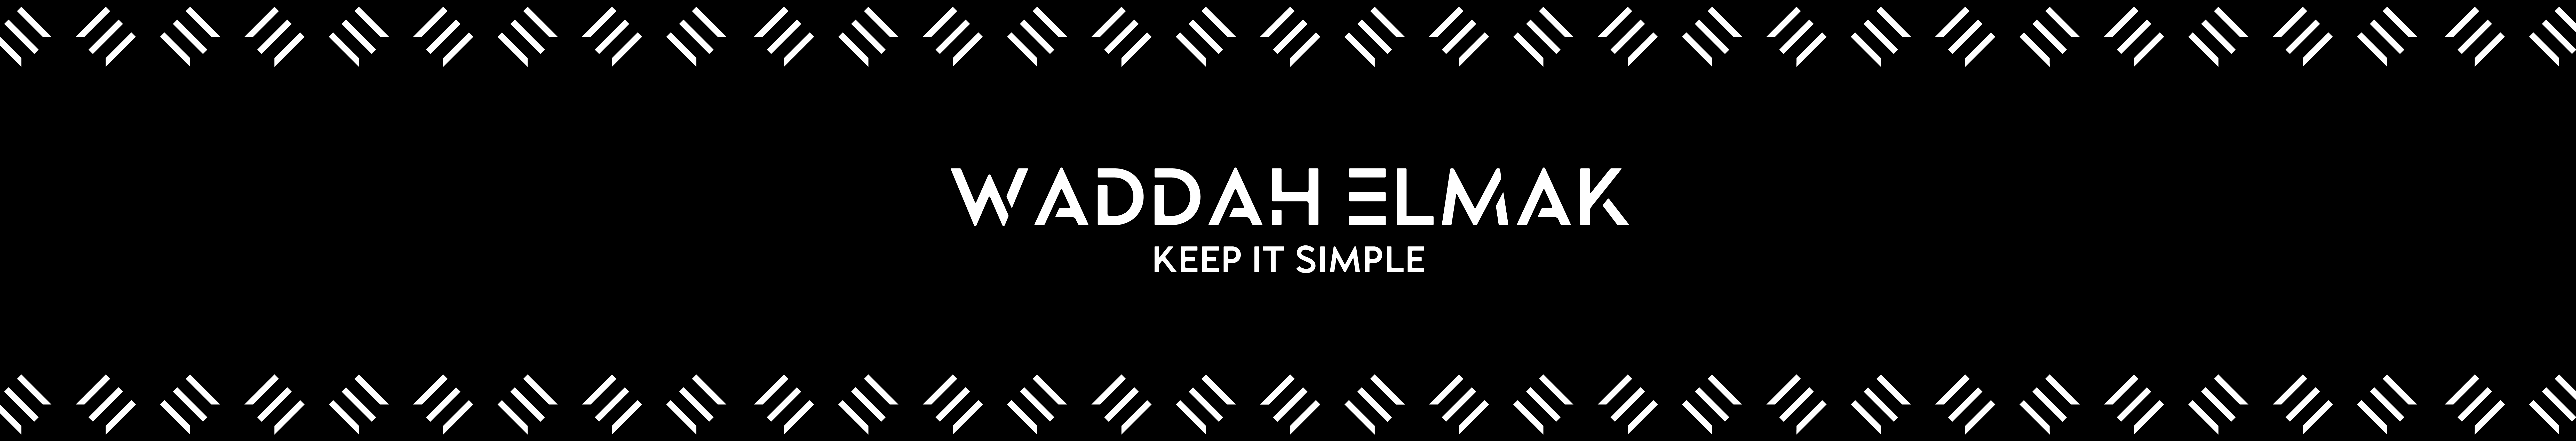 Waddah Elmak's profile banner